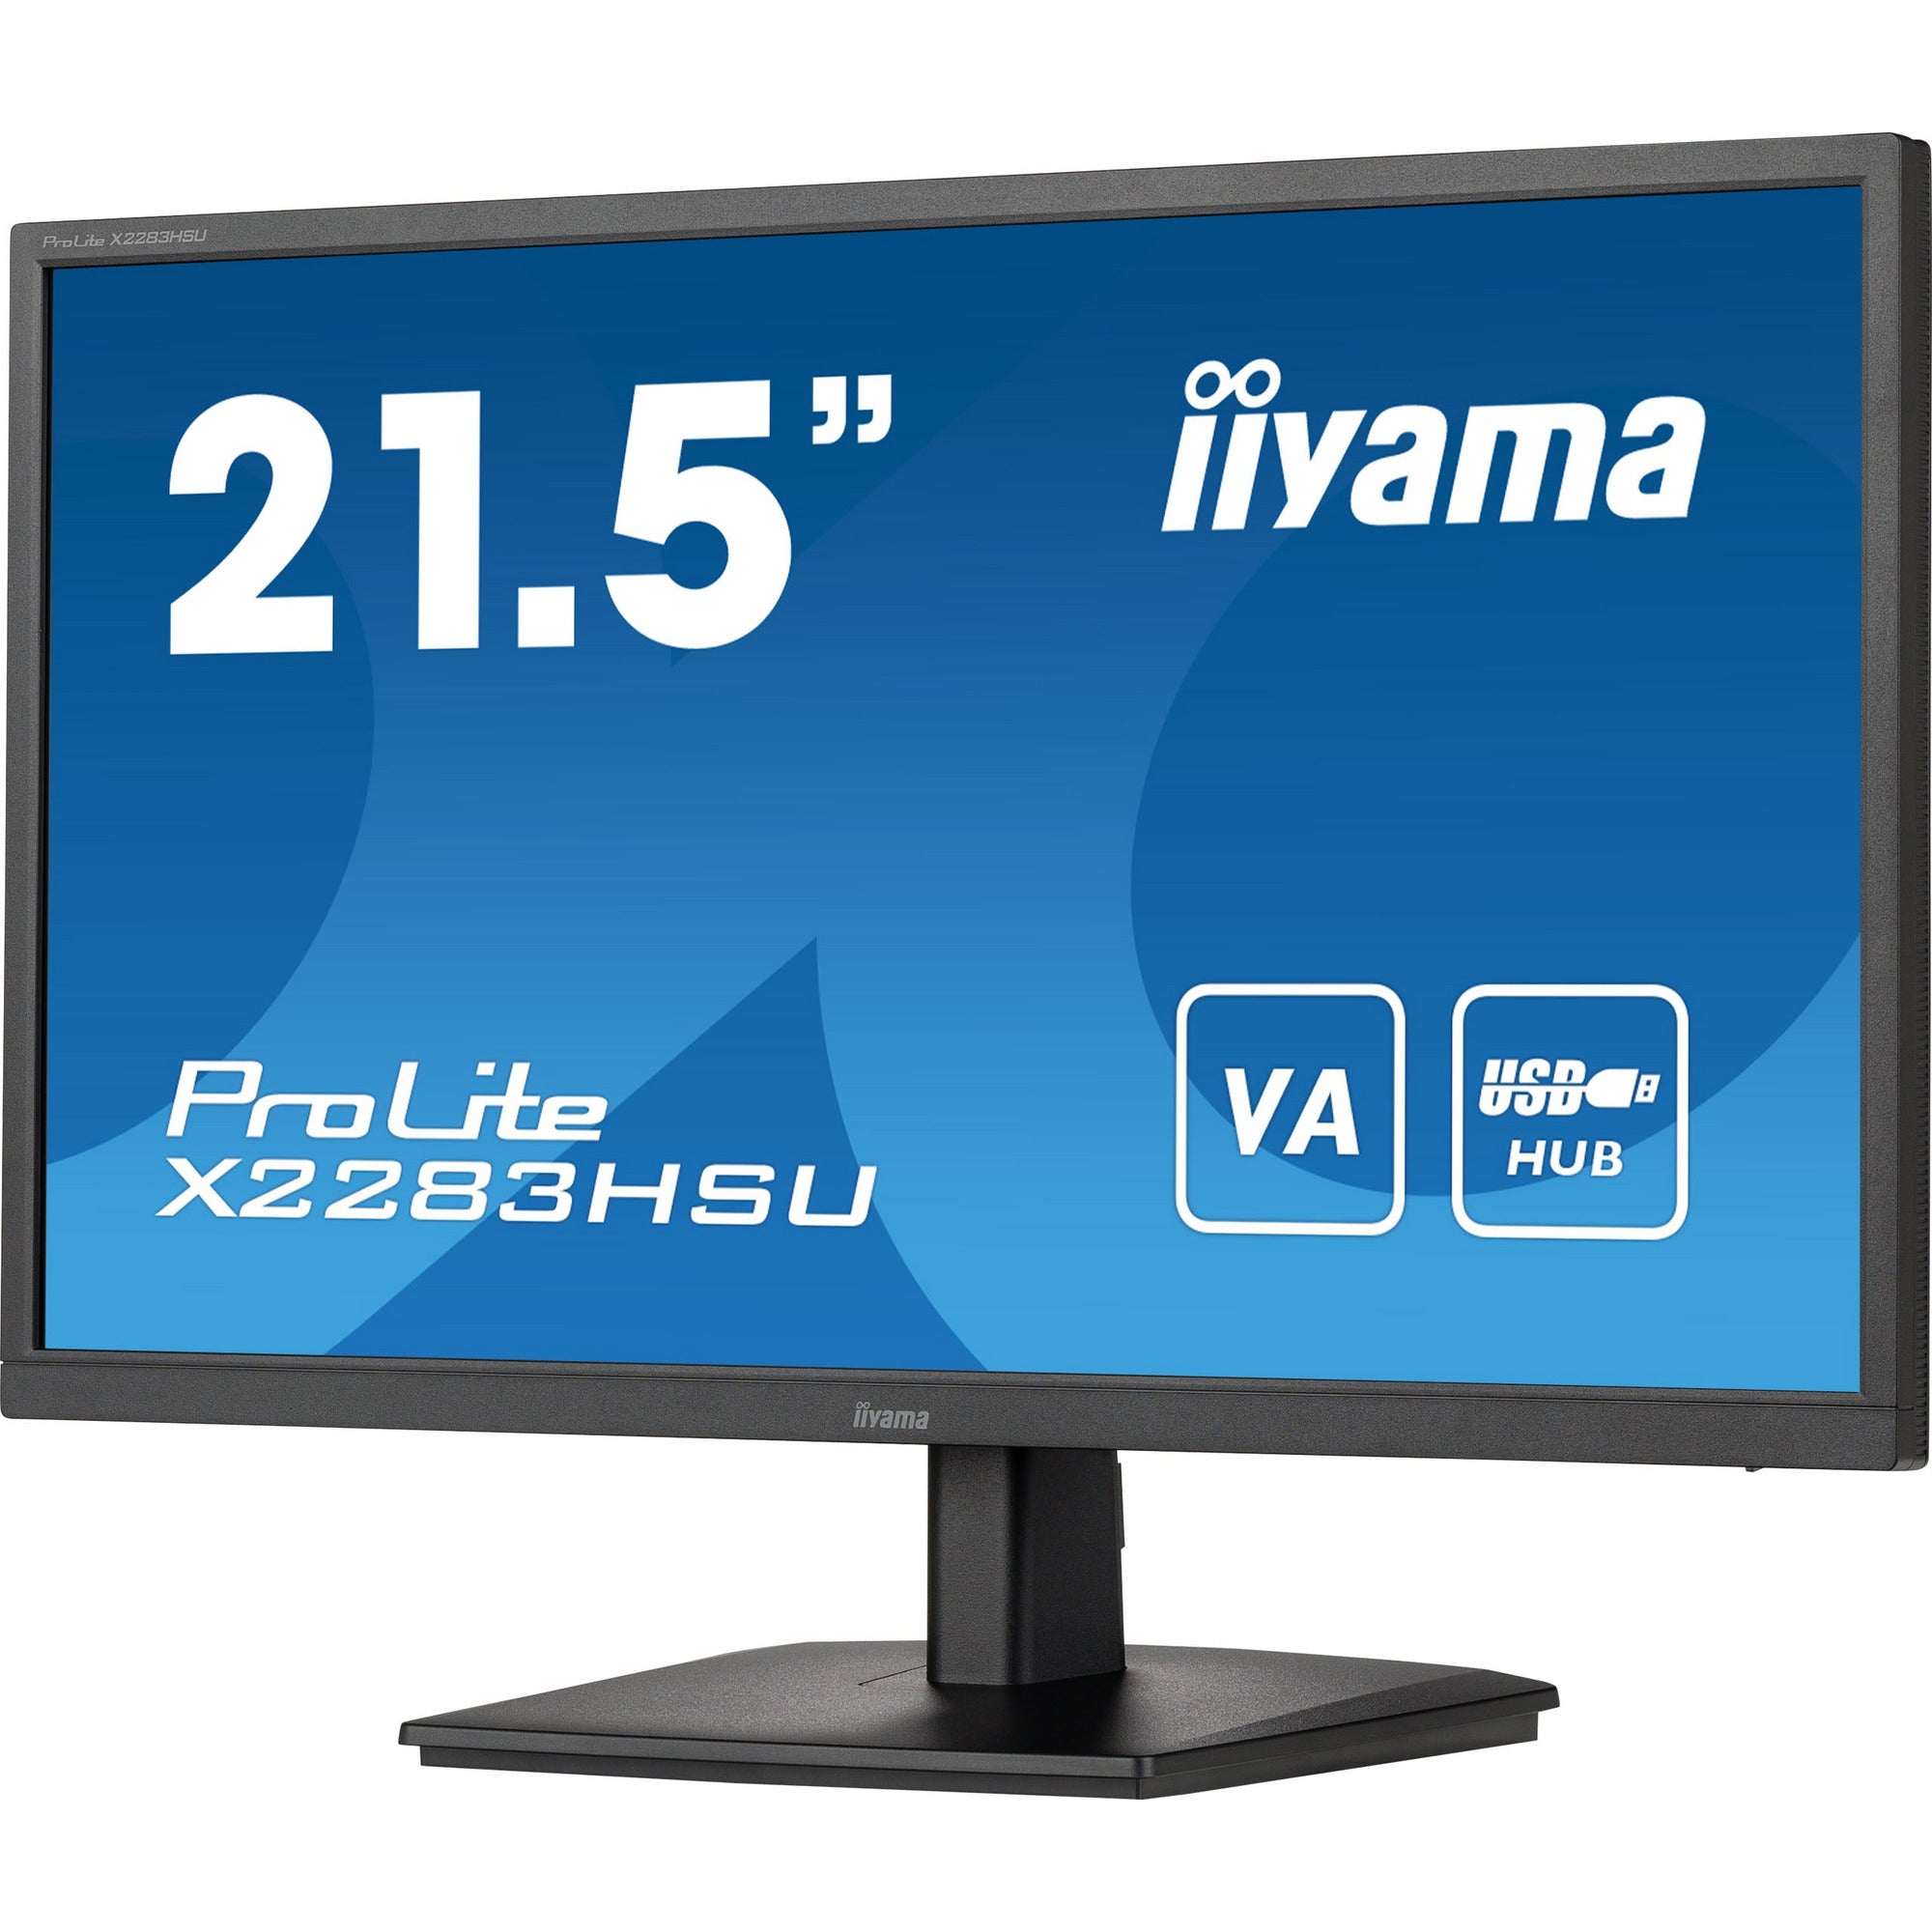 iiyama ProLite X2283HSU-B1 21.5" VA Monitor with Fixed Stand